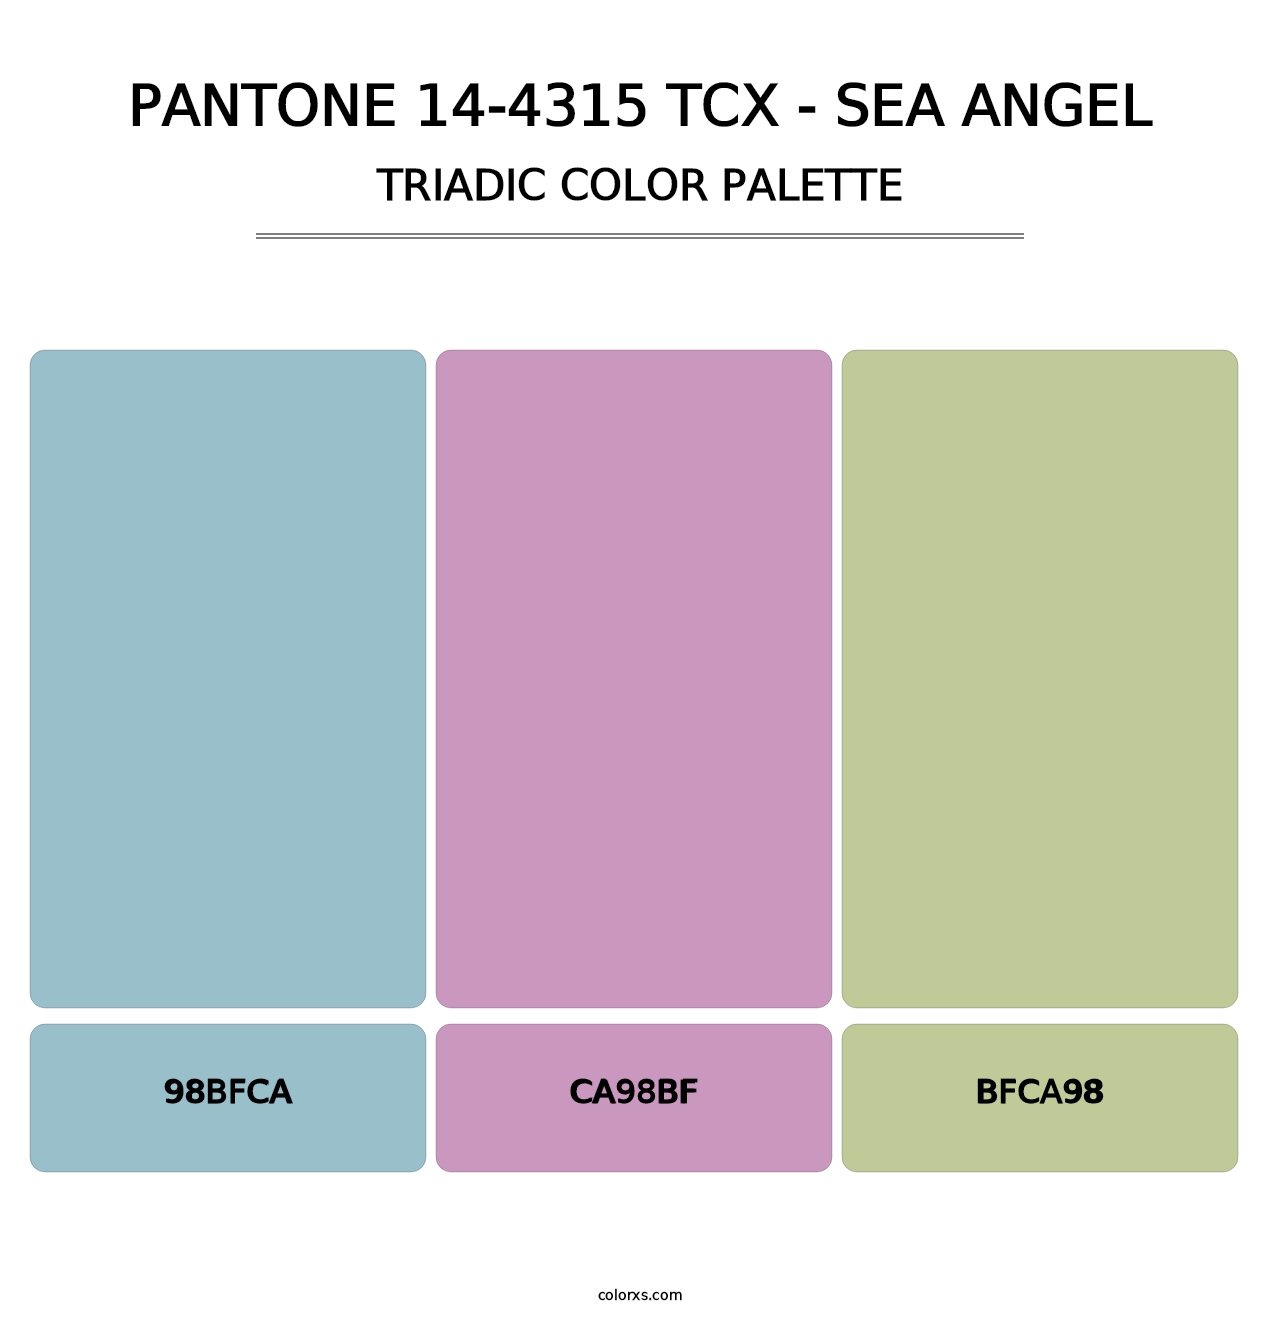 PANTONE 14-4315 TCX - Sea Angel - Triadic Color Palette